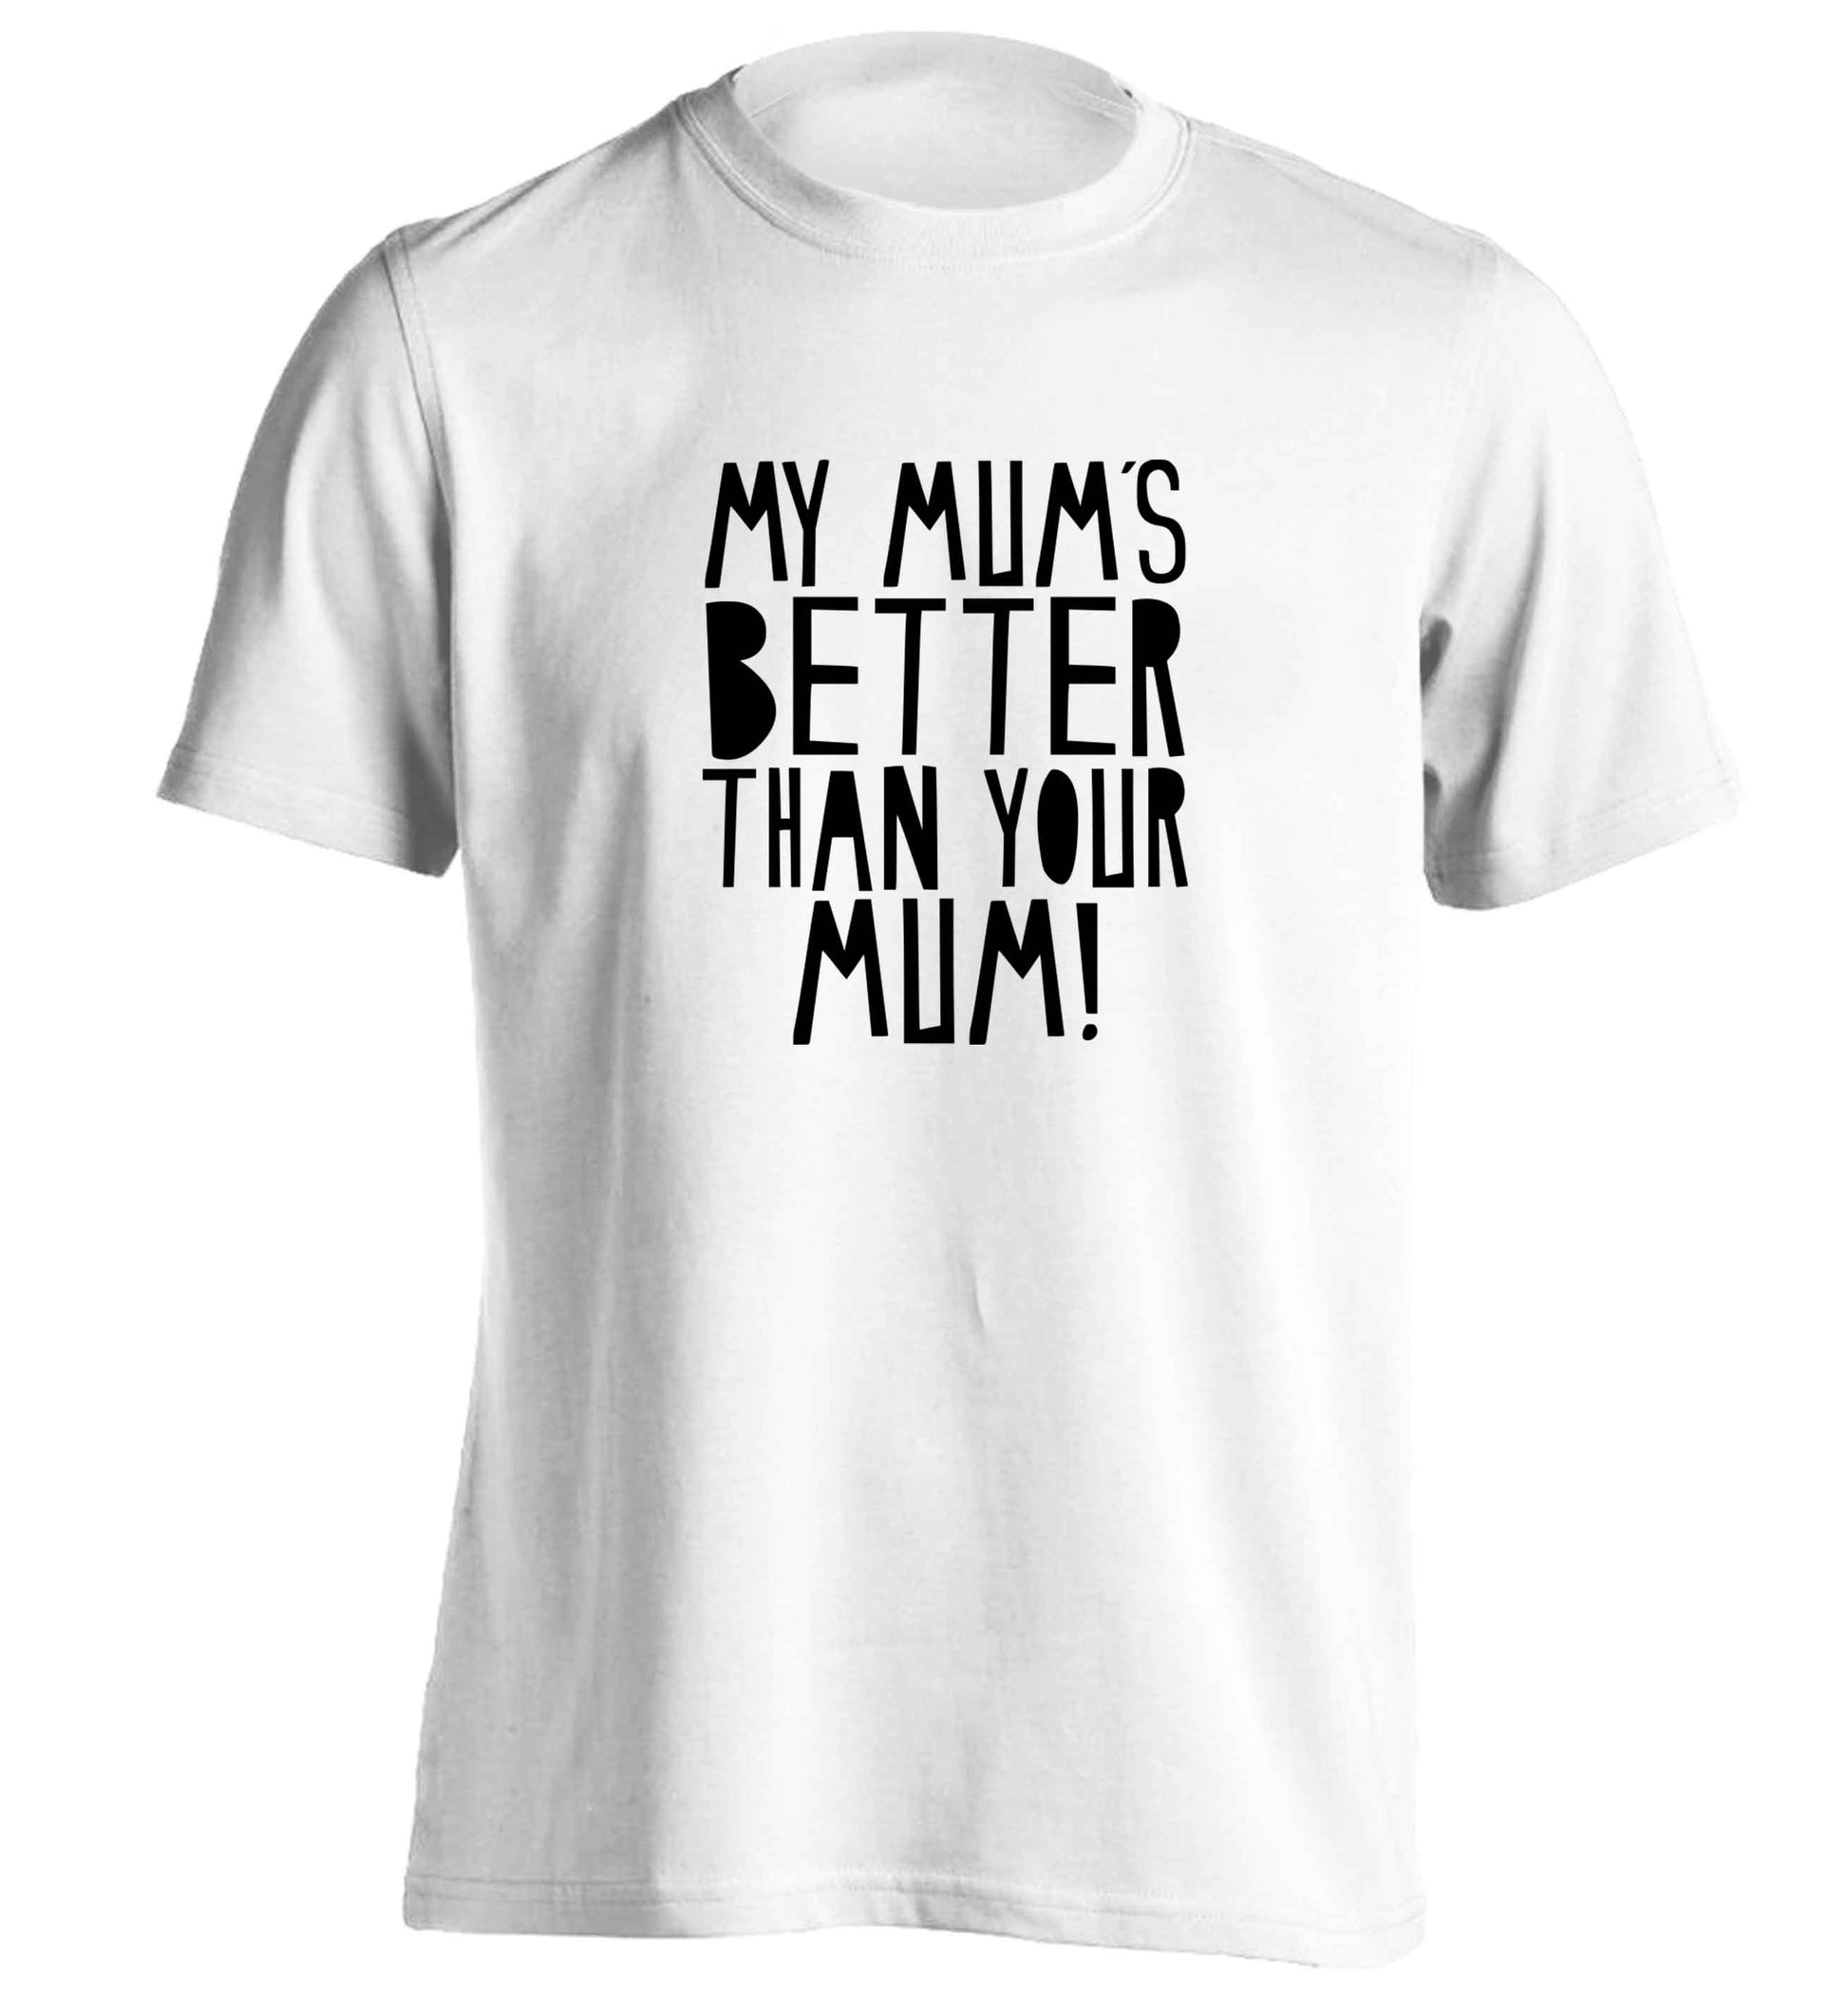 My mum's better than your mum adults unisex white Tshirt 2XL